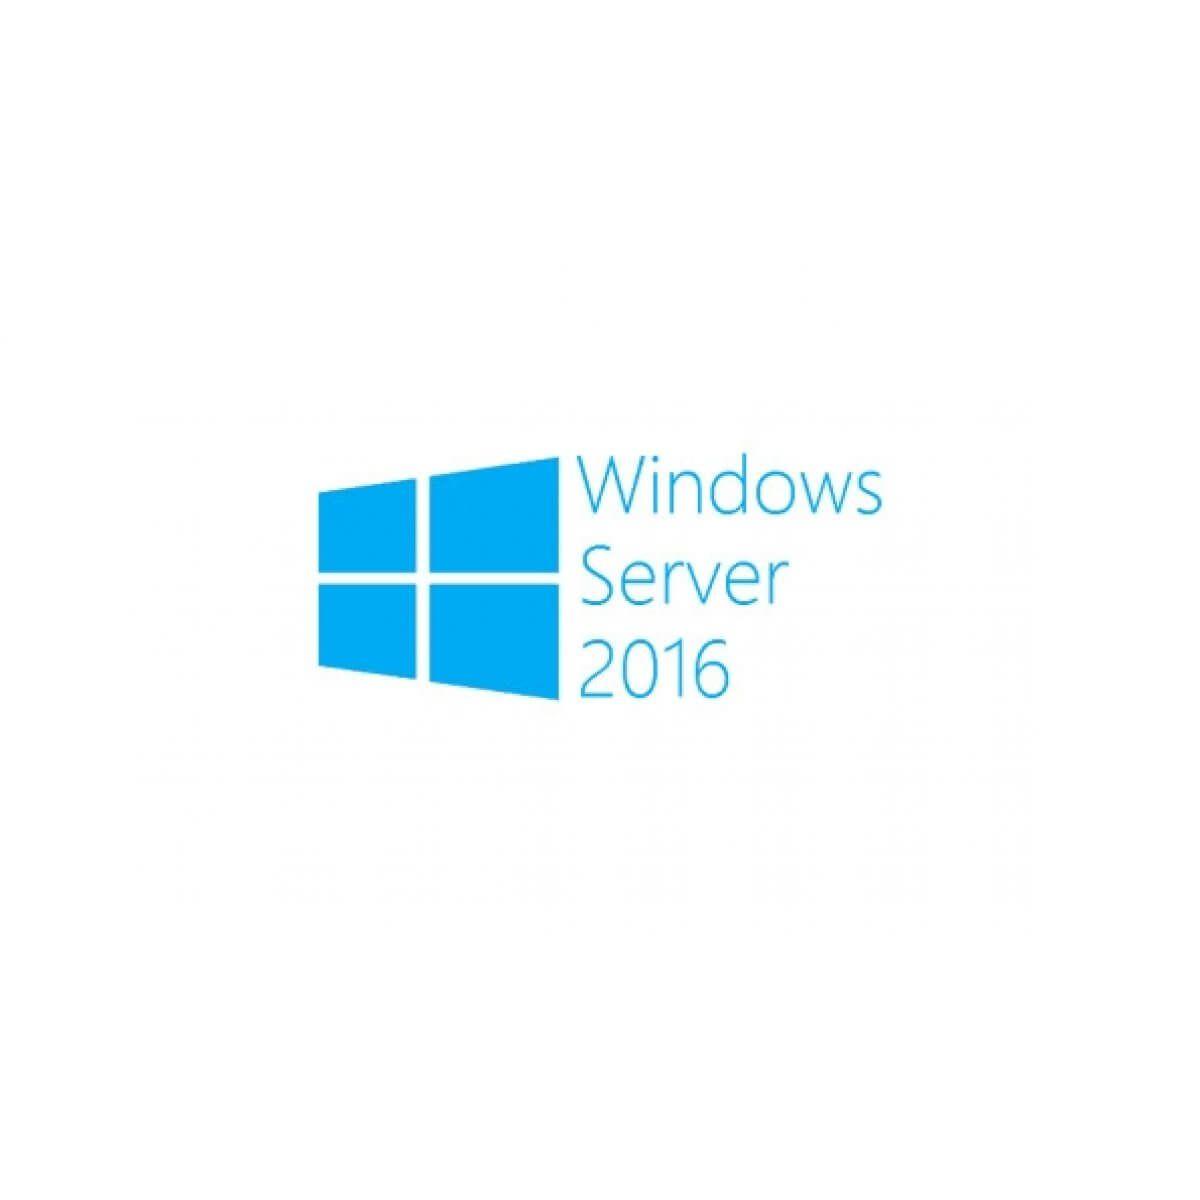 Windows Server 2016 Logo - Buy Microsoft Windows Server 2016 Datacenter in Australia